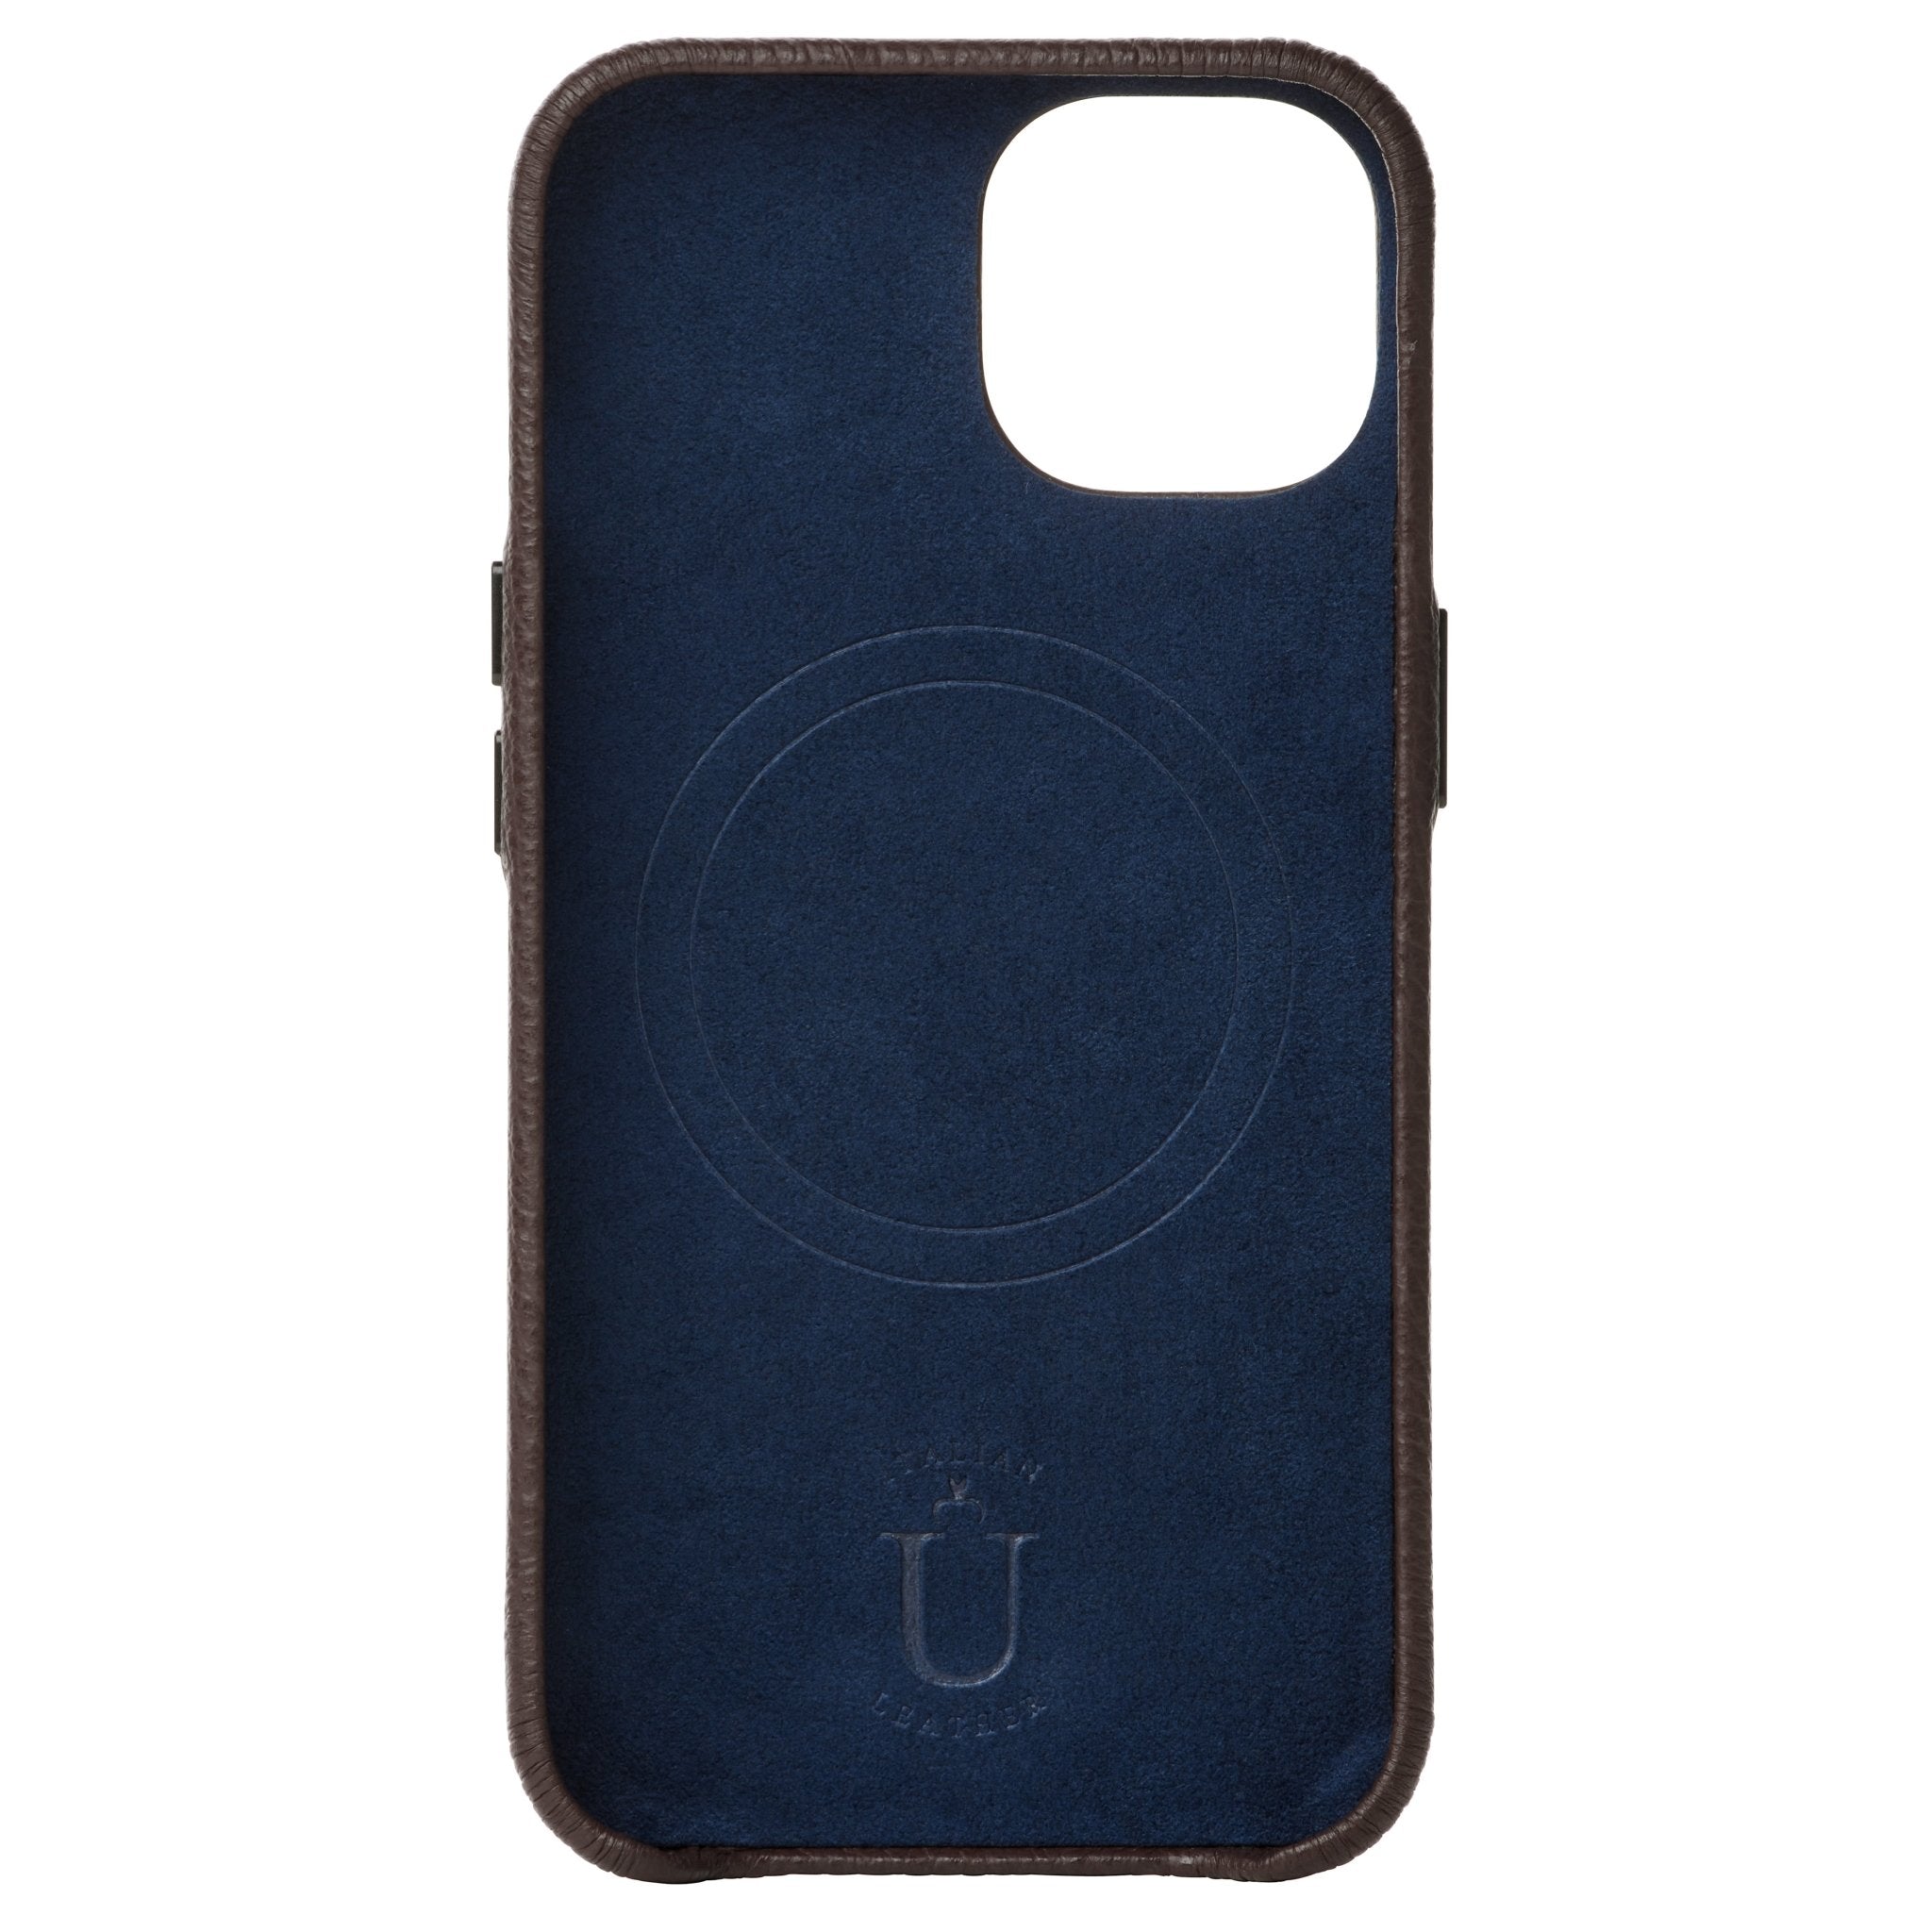 Ubique Italy Luxury iPhone Case 12 Pro Pebble Grain Leather Dark Walnut Inner Lining